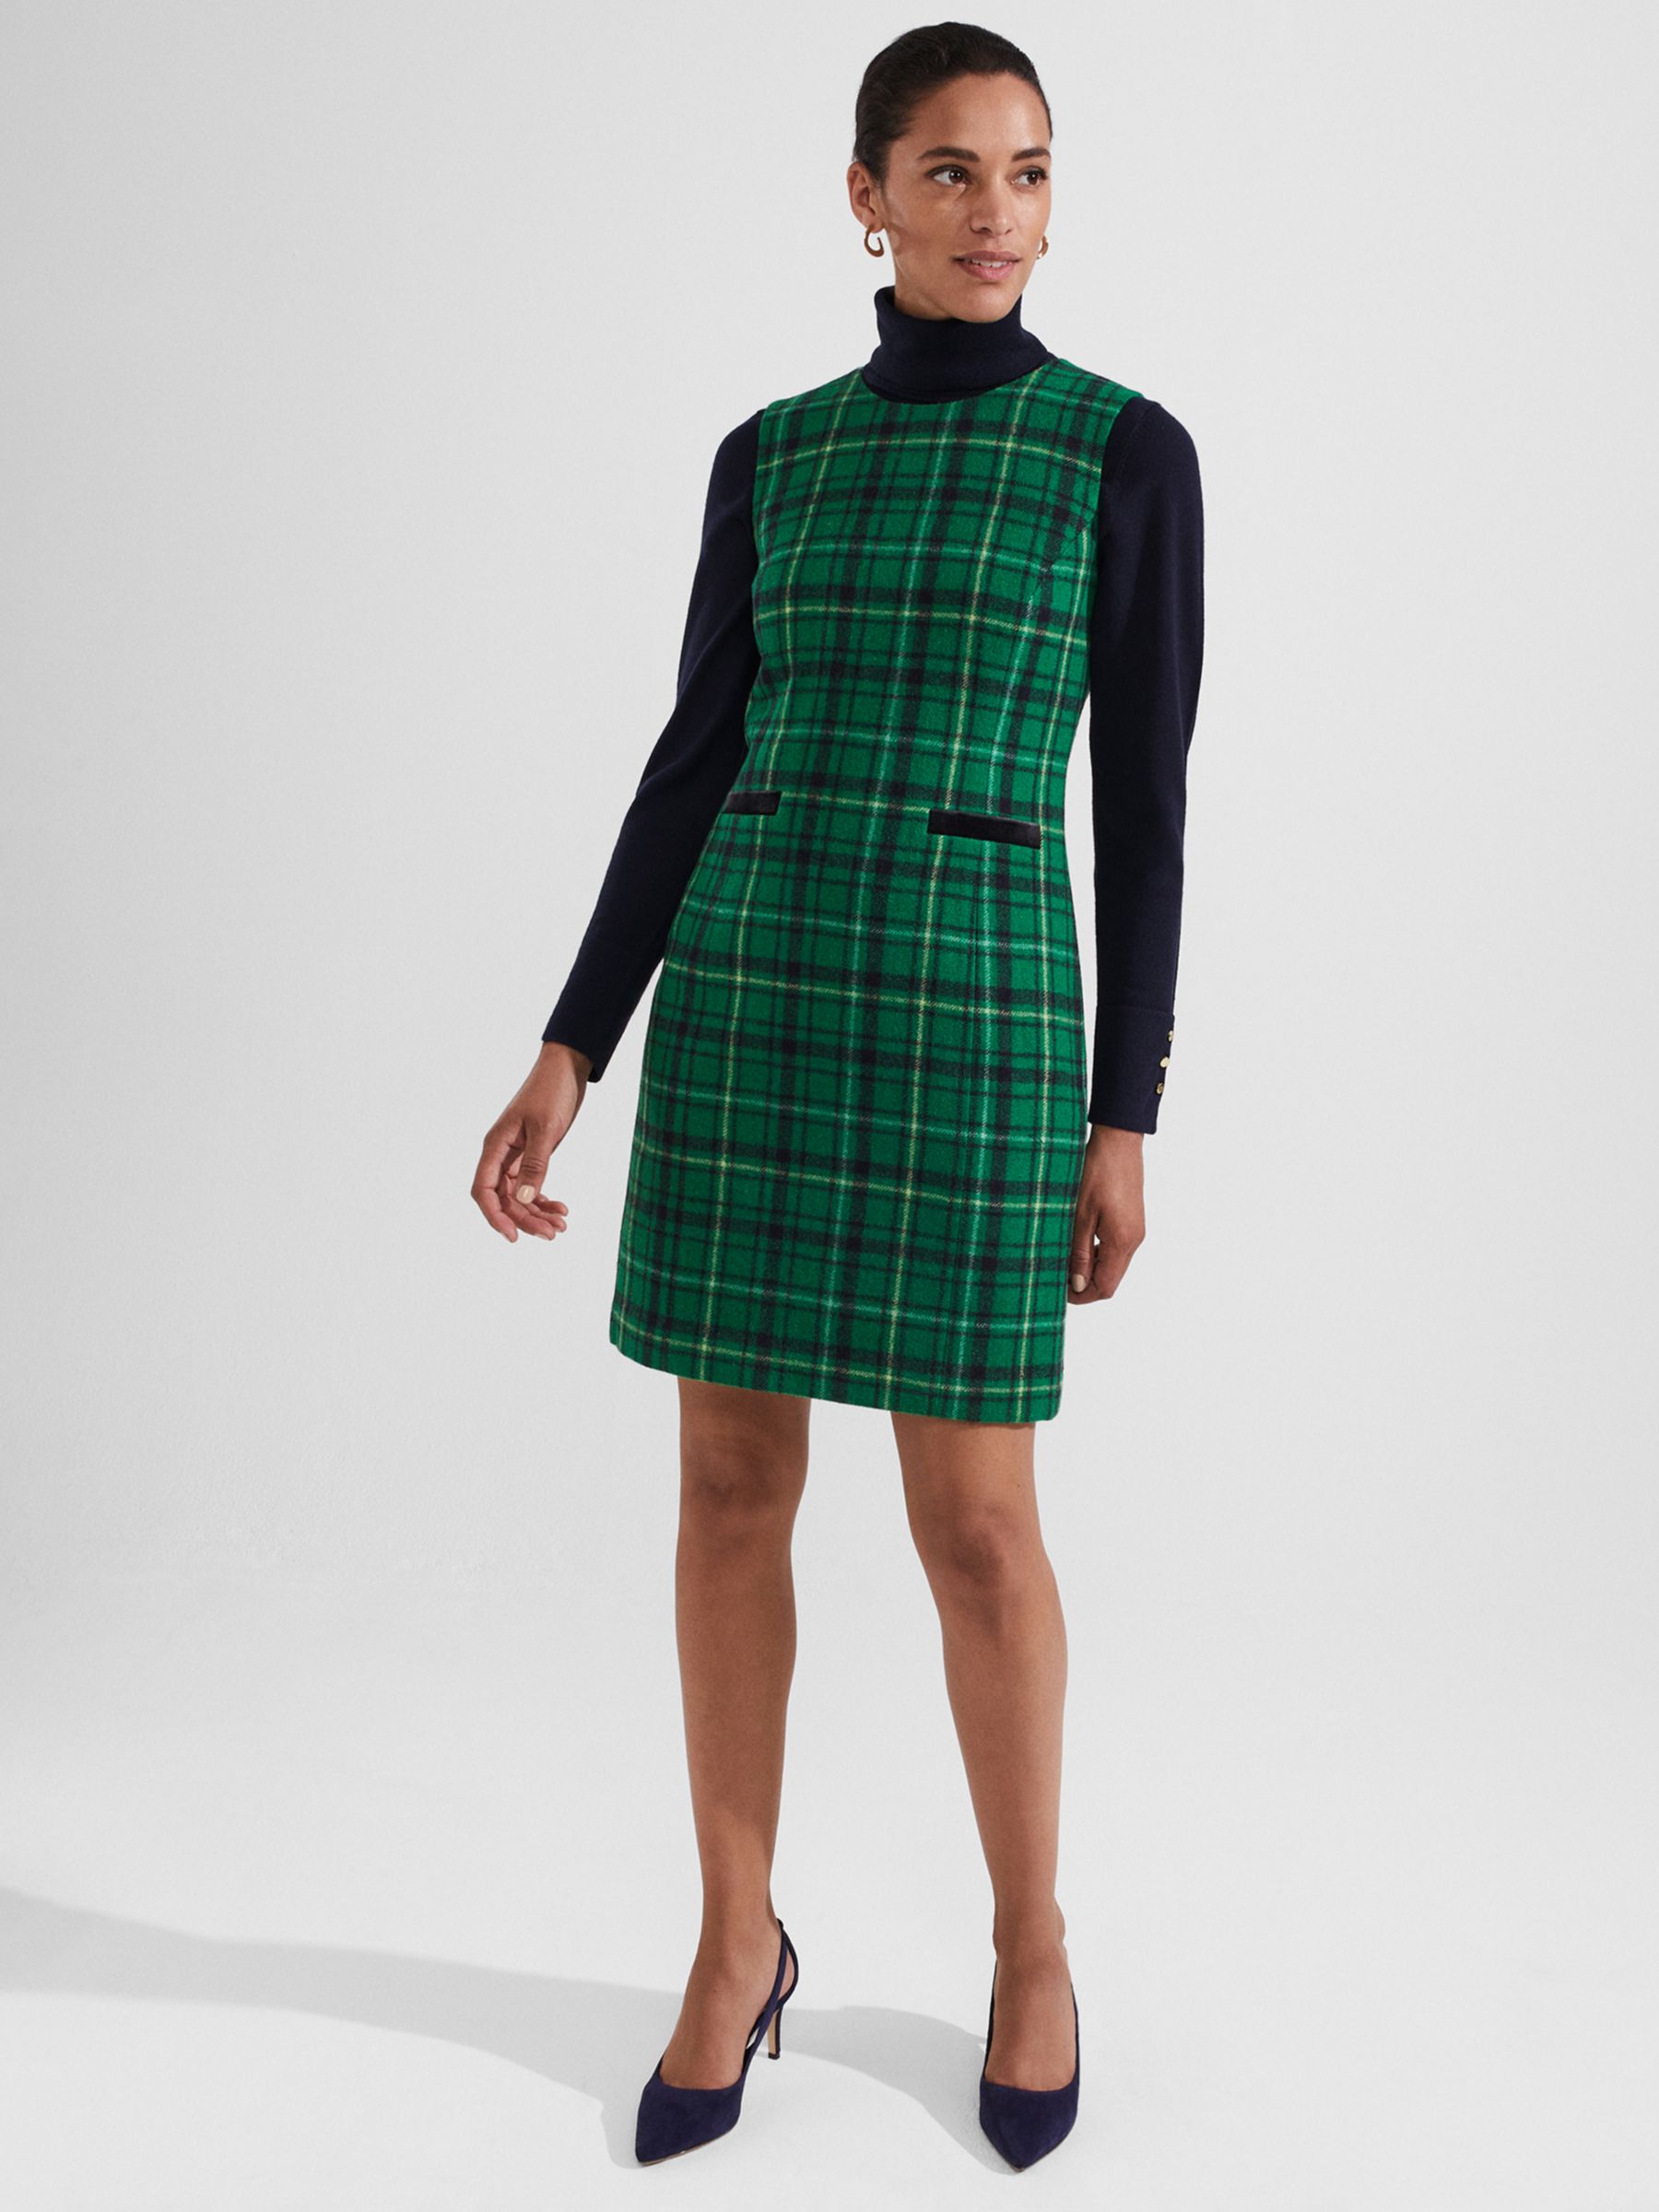 Hobbs Talia Knitted Dress, Leaf Green at John Lewis & Partners